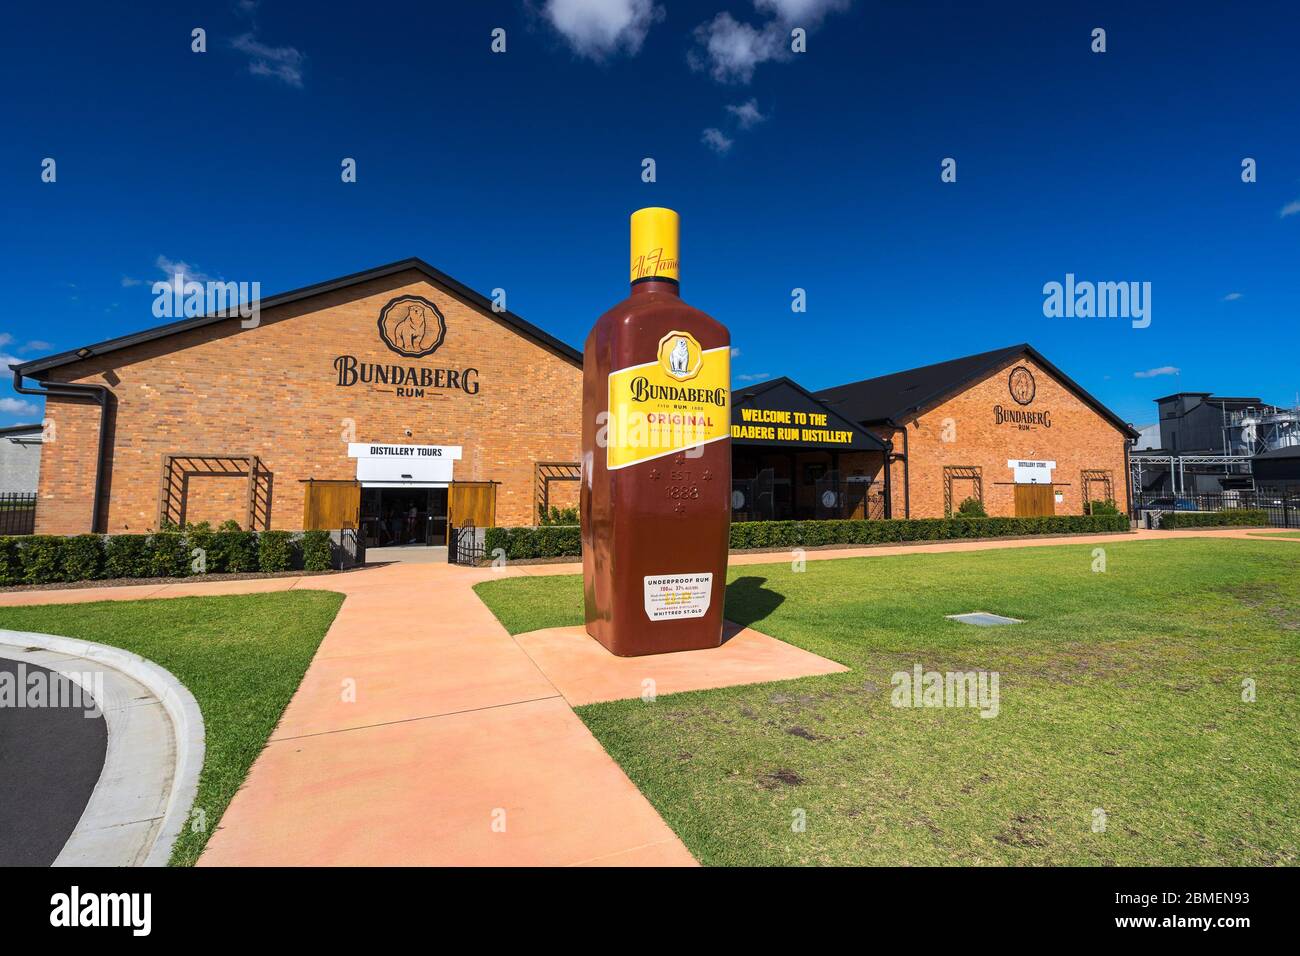 Bundaberg, Queensland, Australia - Bundaberg Rum distillery building Stock Photo